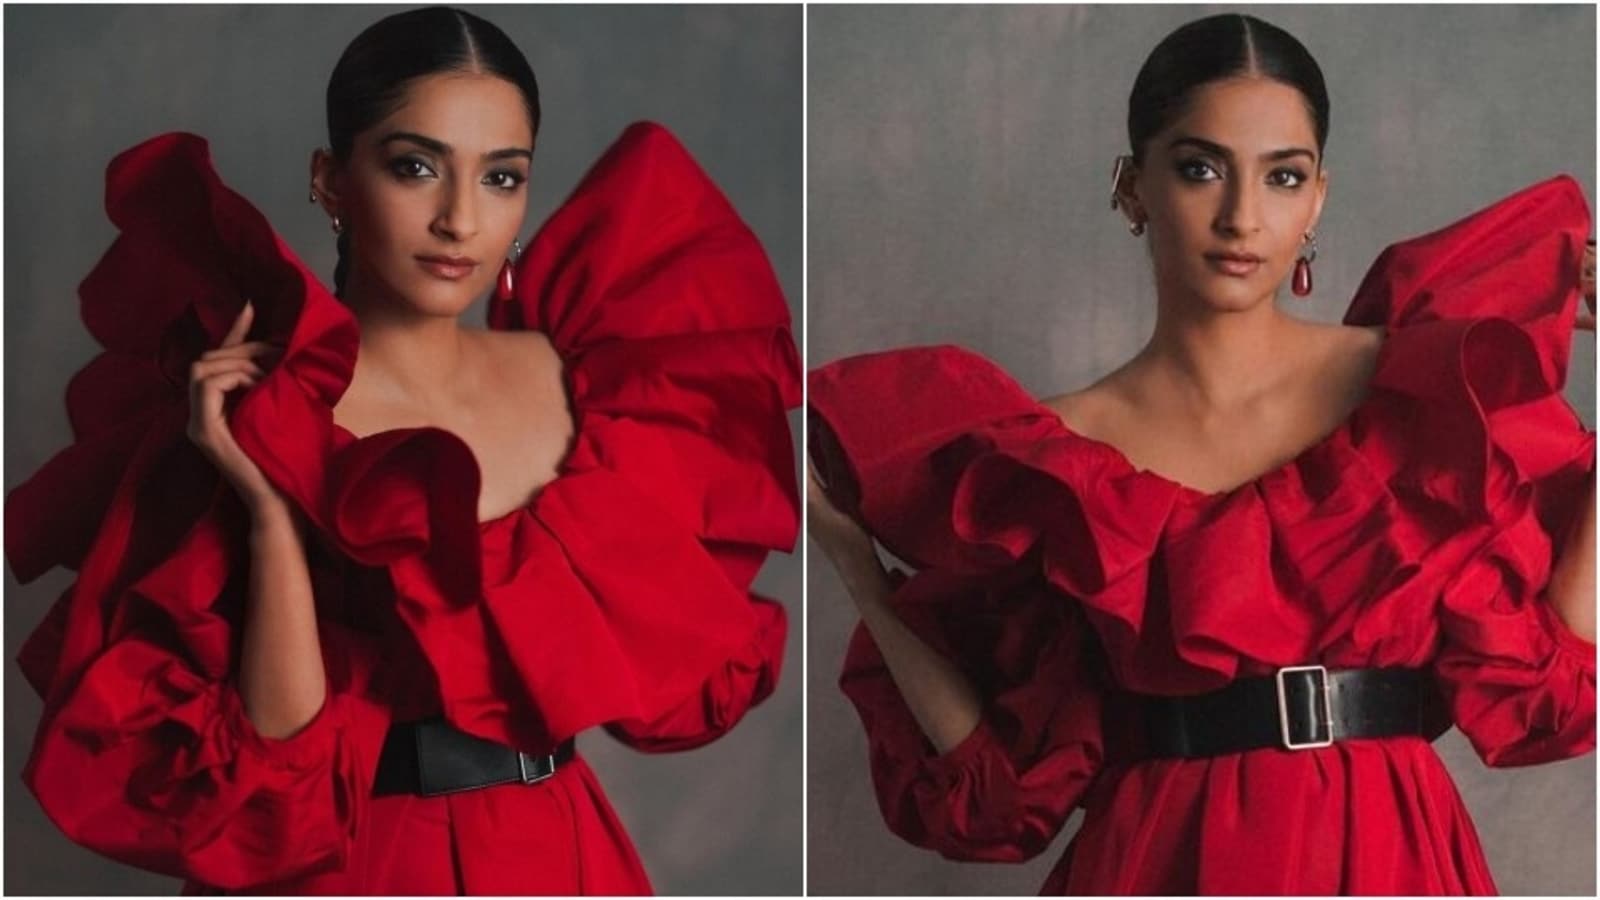 Sonam Kapoor shares photographs of herself in bizarre dress